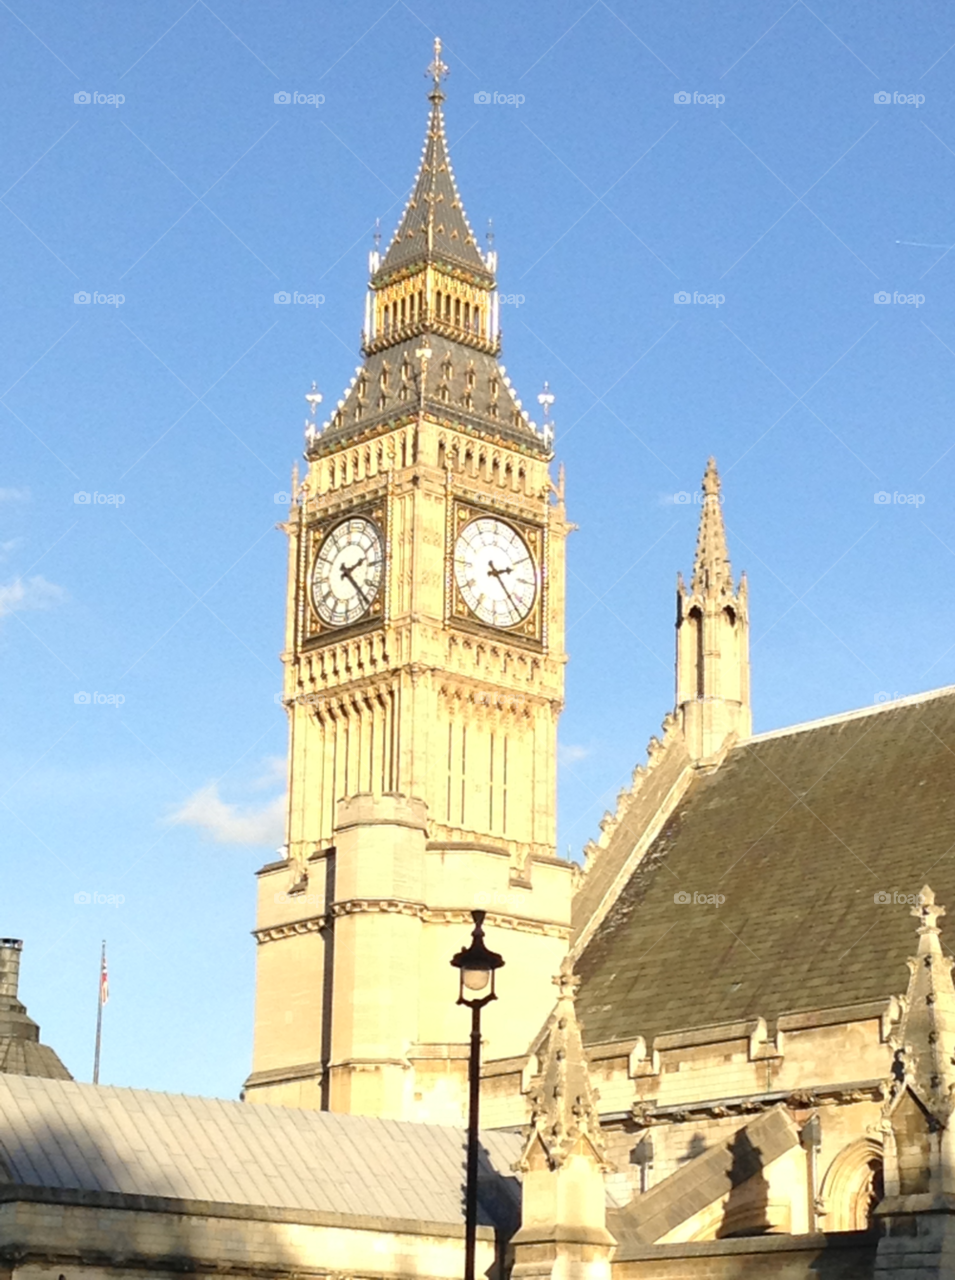 london big ben house of parlament by tert